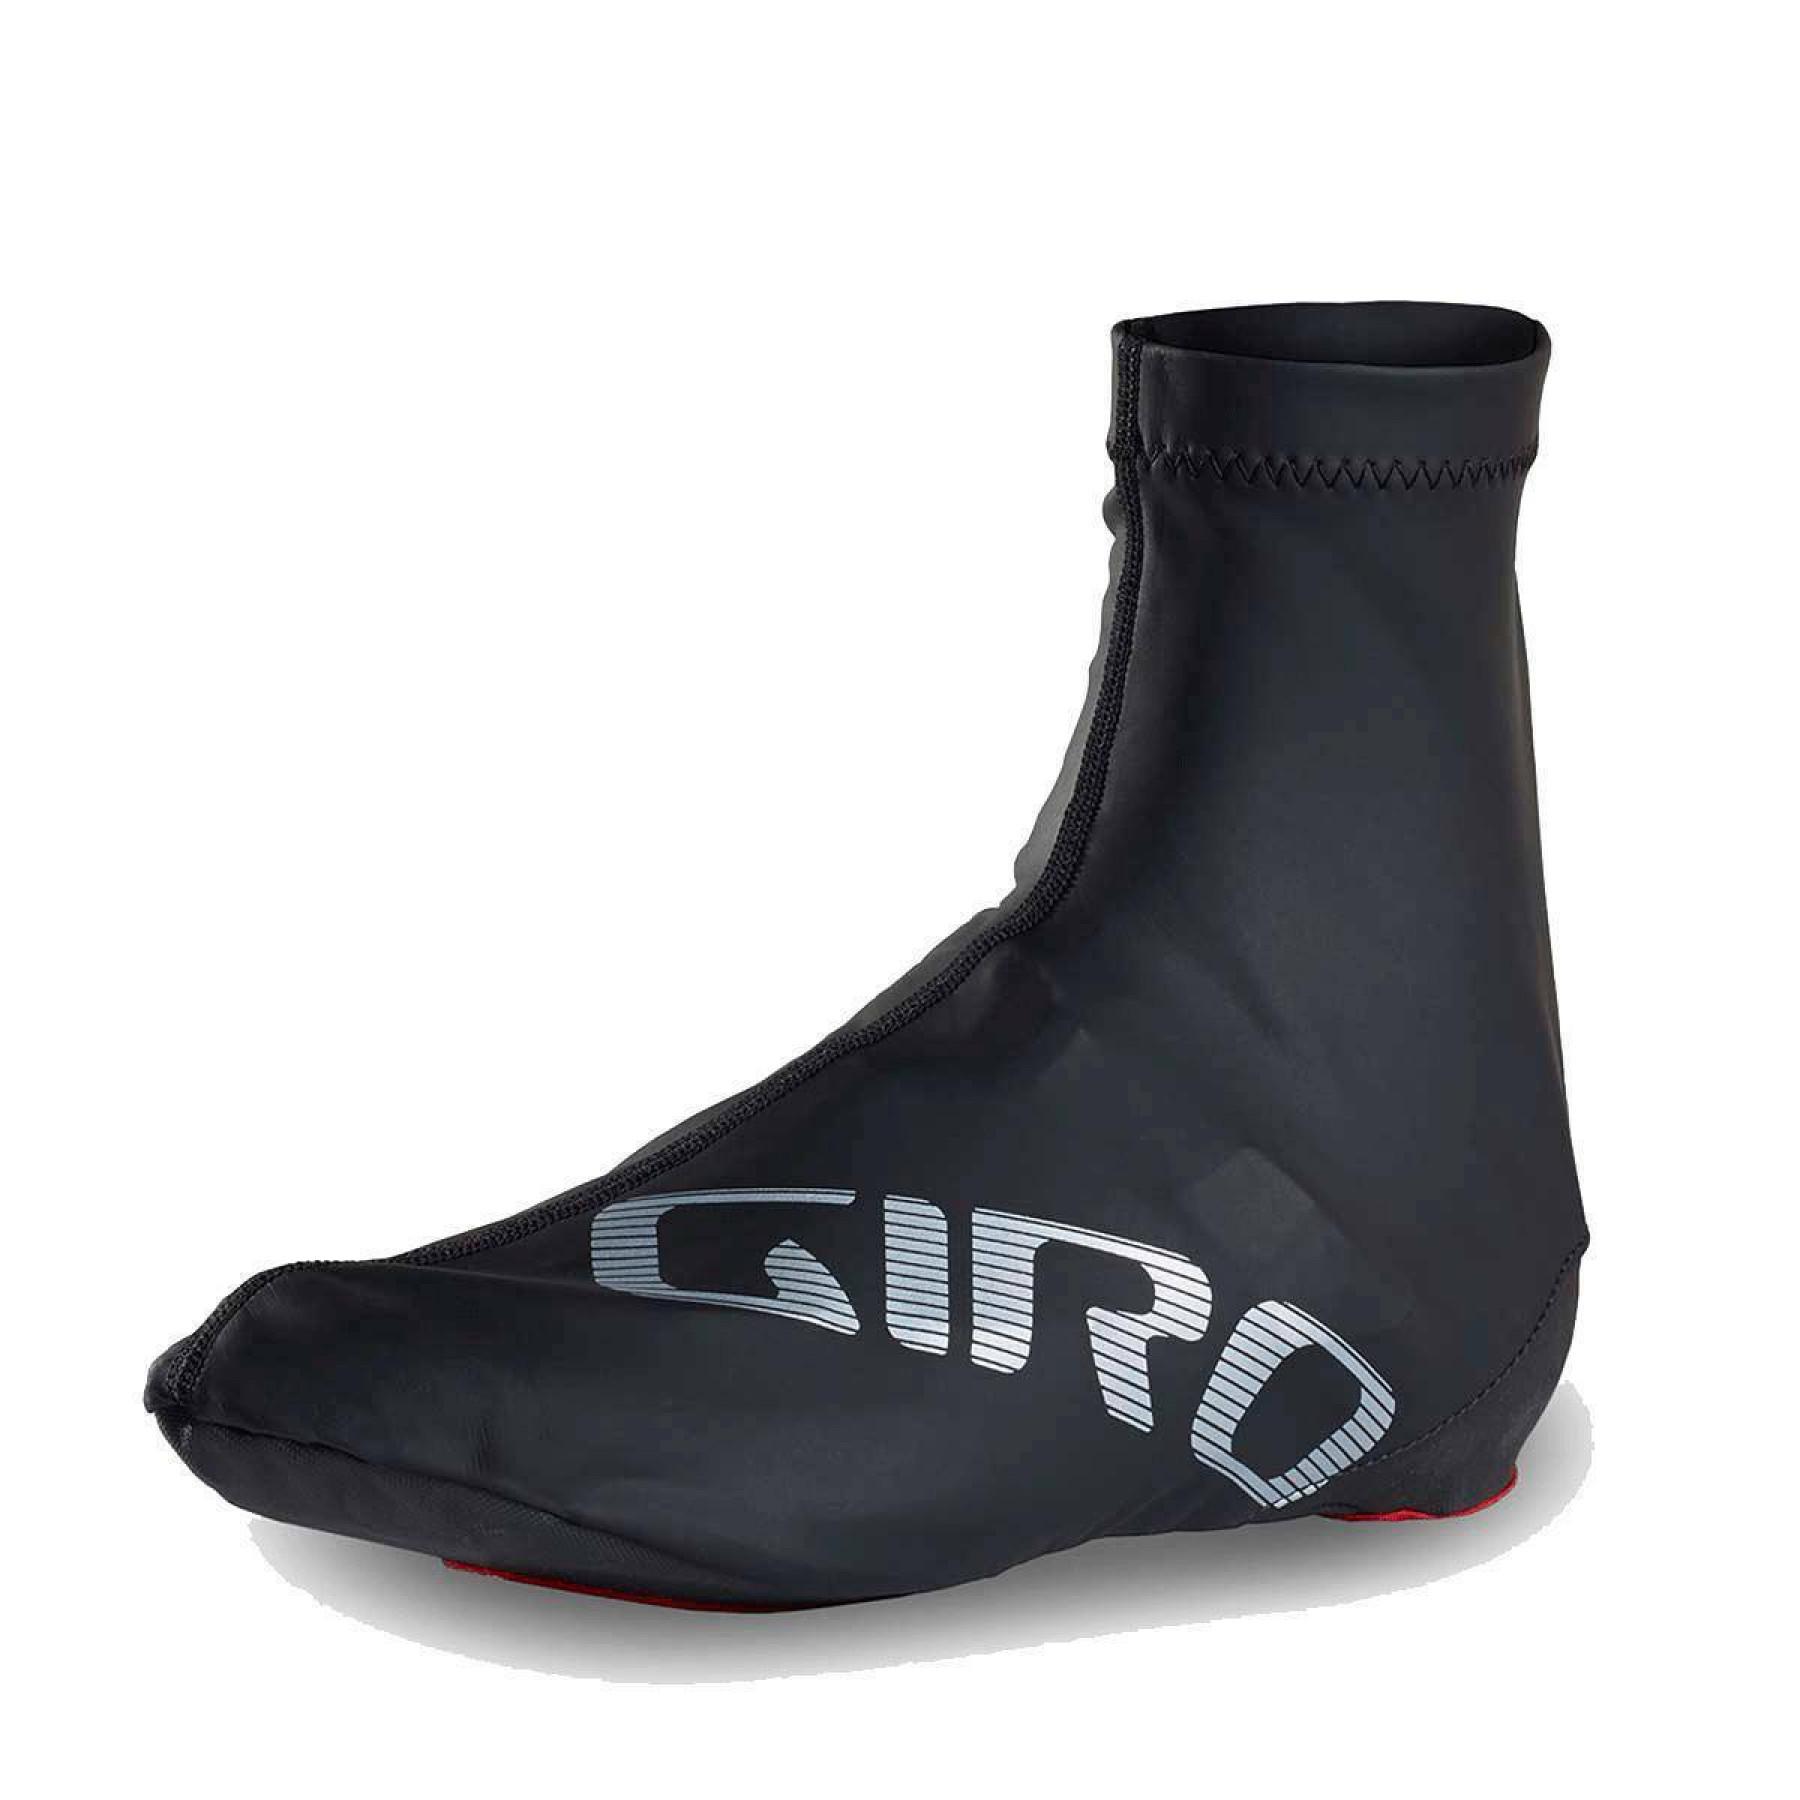 Copriscarpe Giro Blaze Shoe Cover